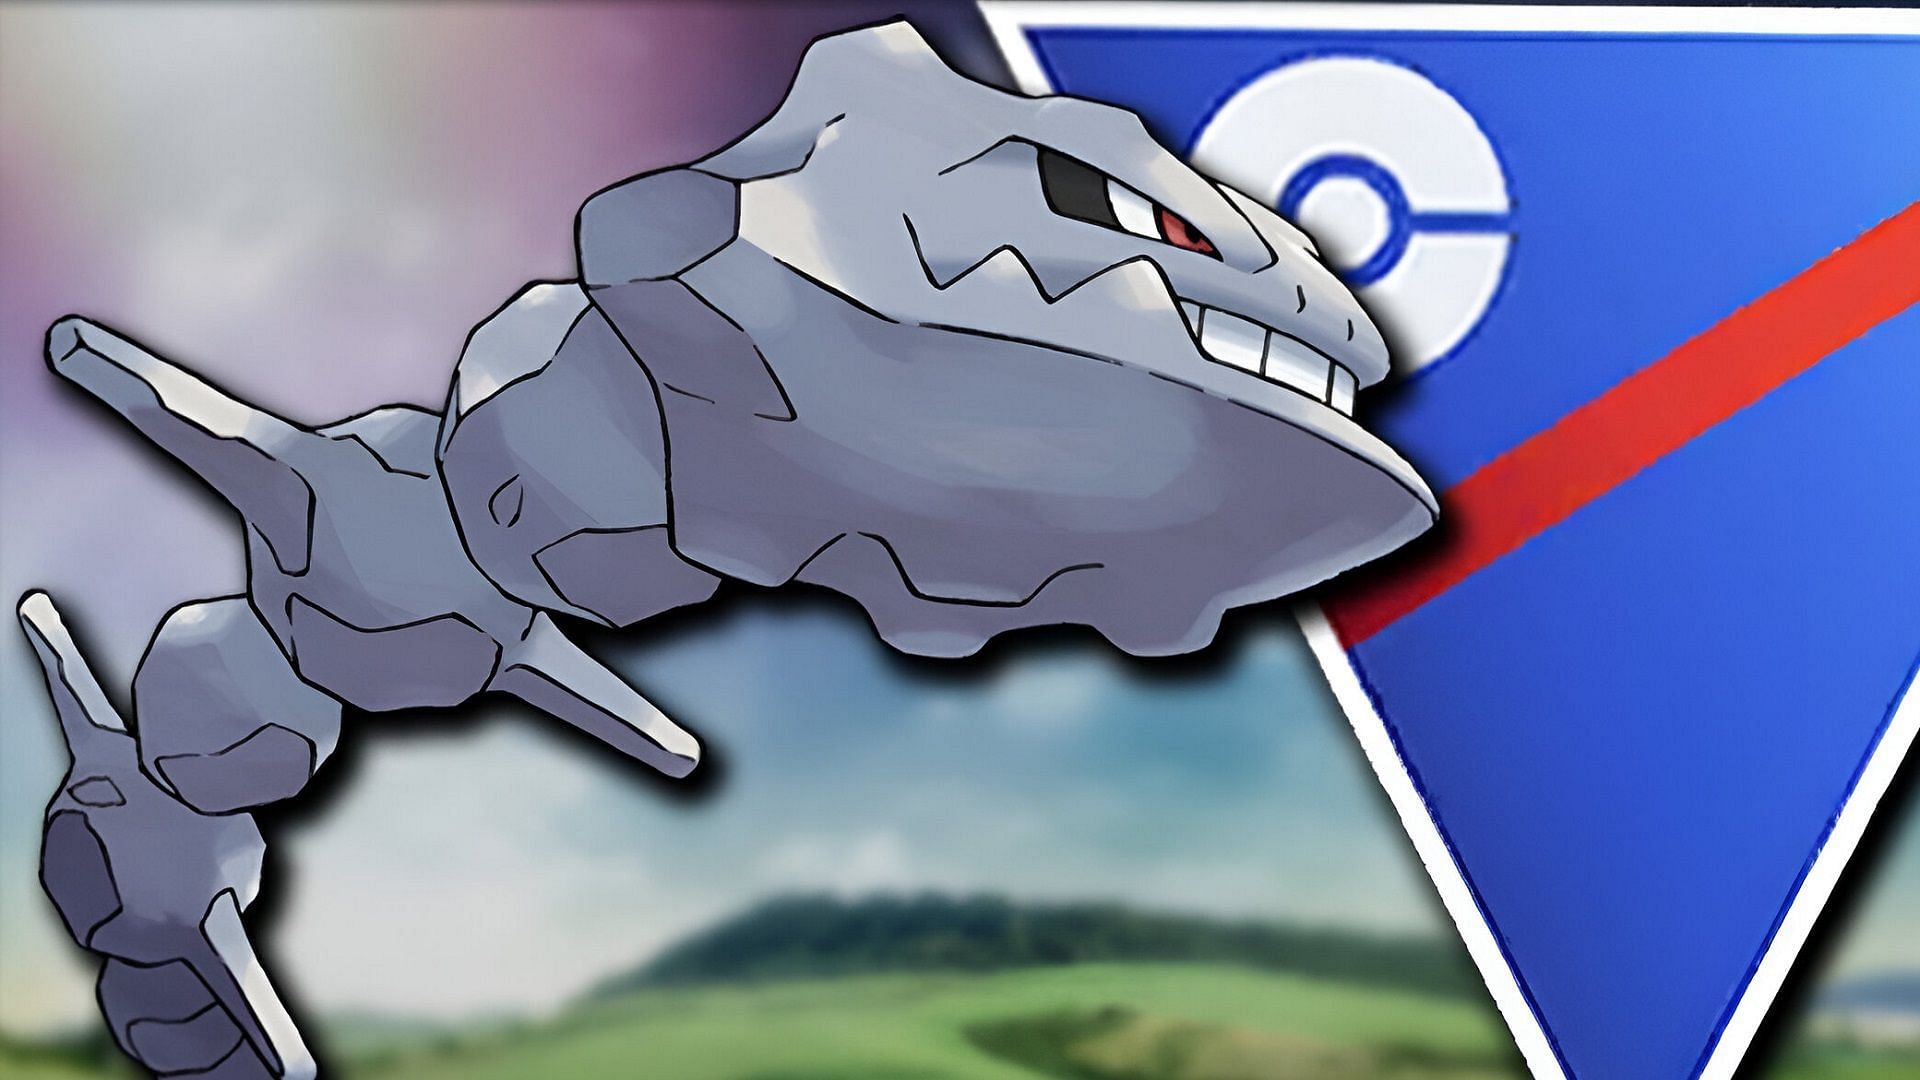 Steelix (Pokémon GO): Stats, Moves, Counters, Evolution